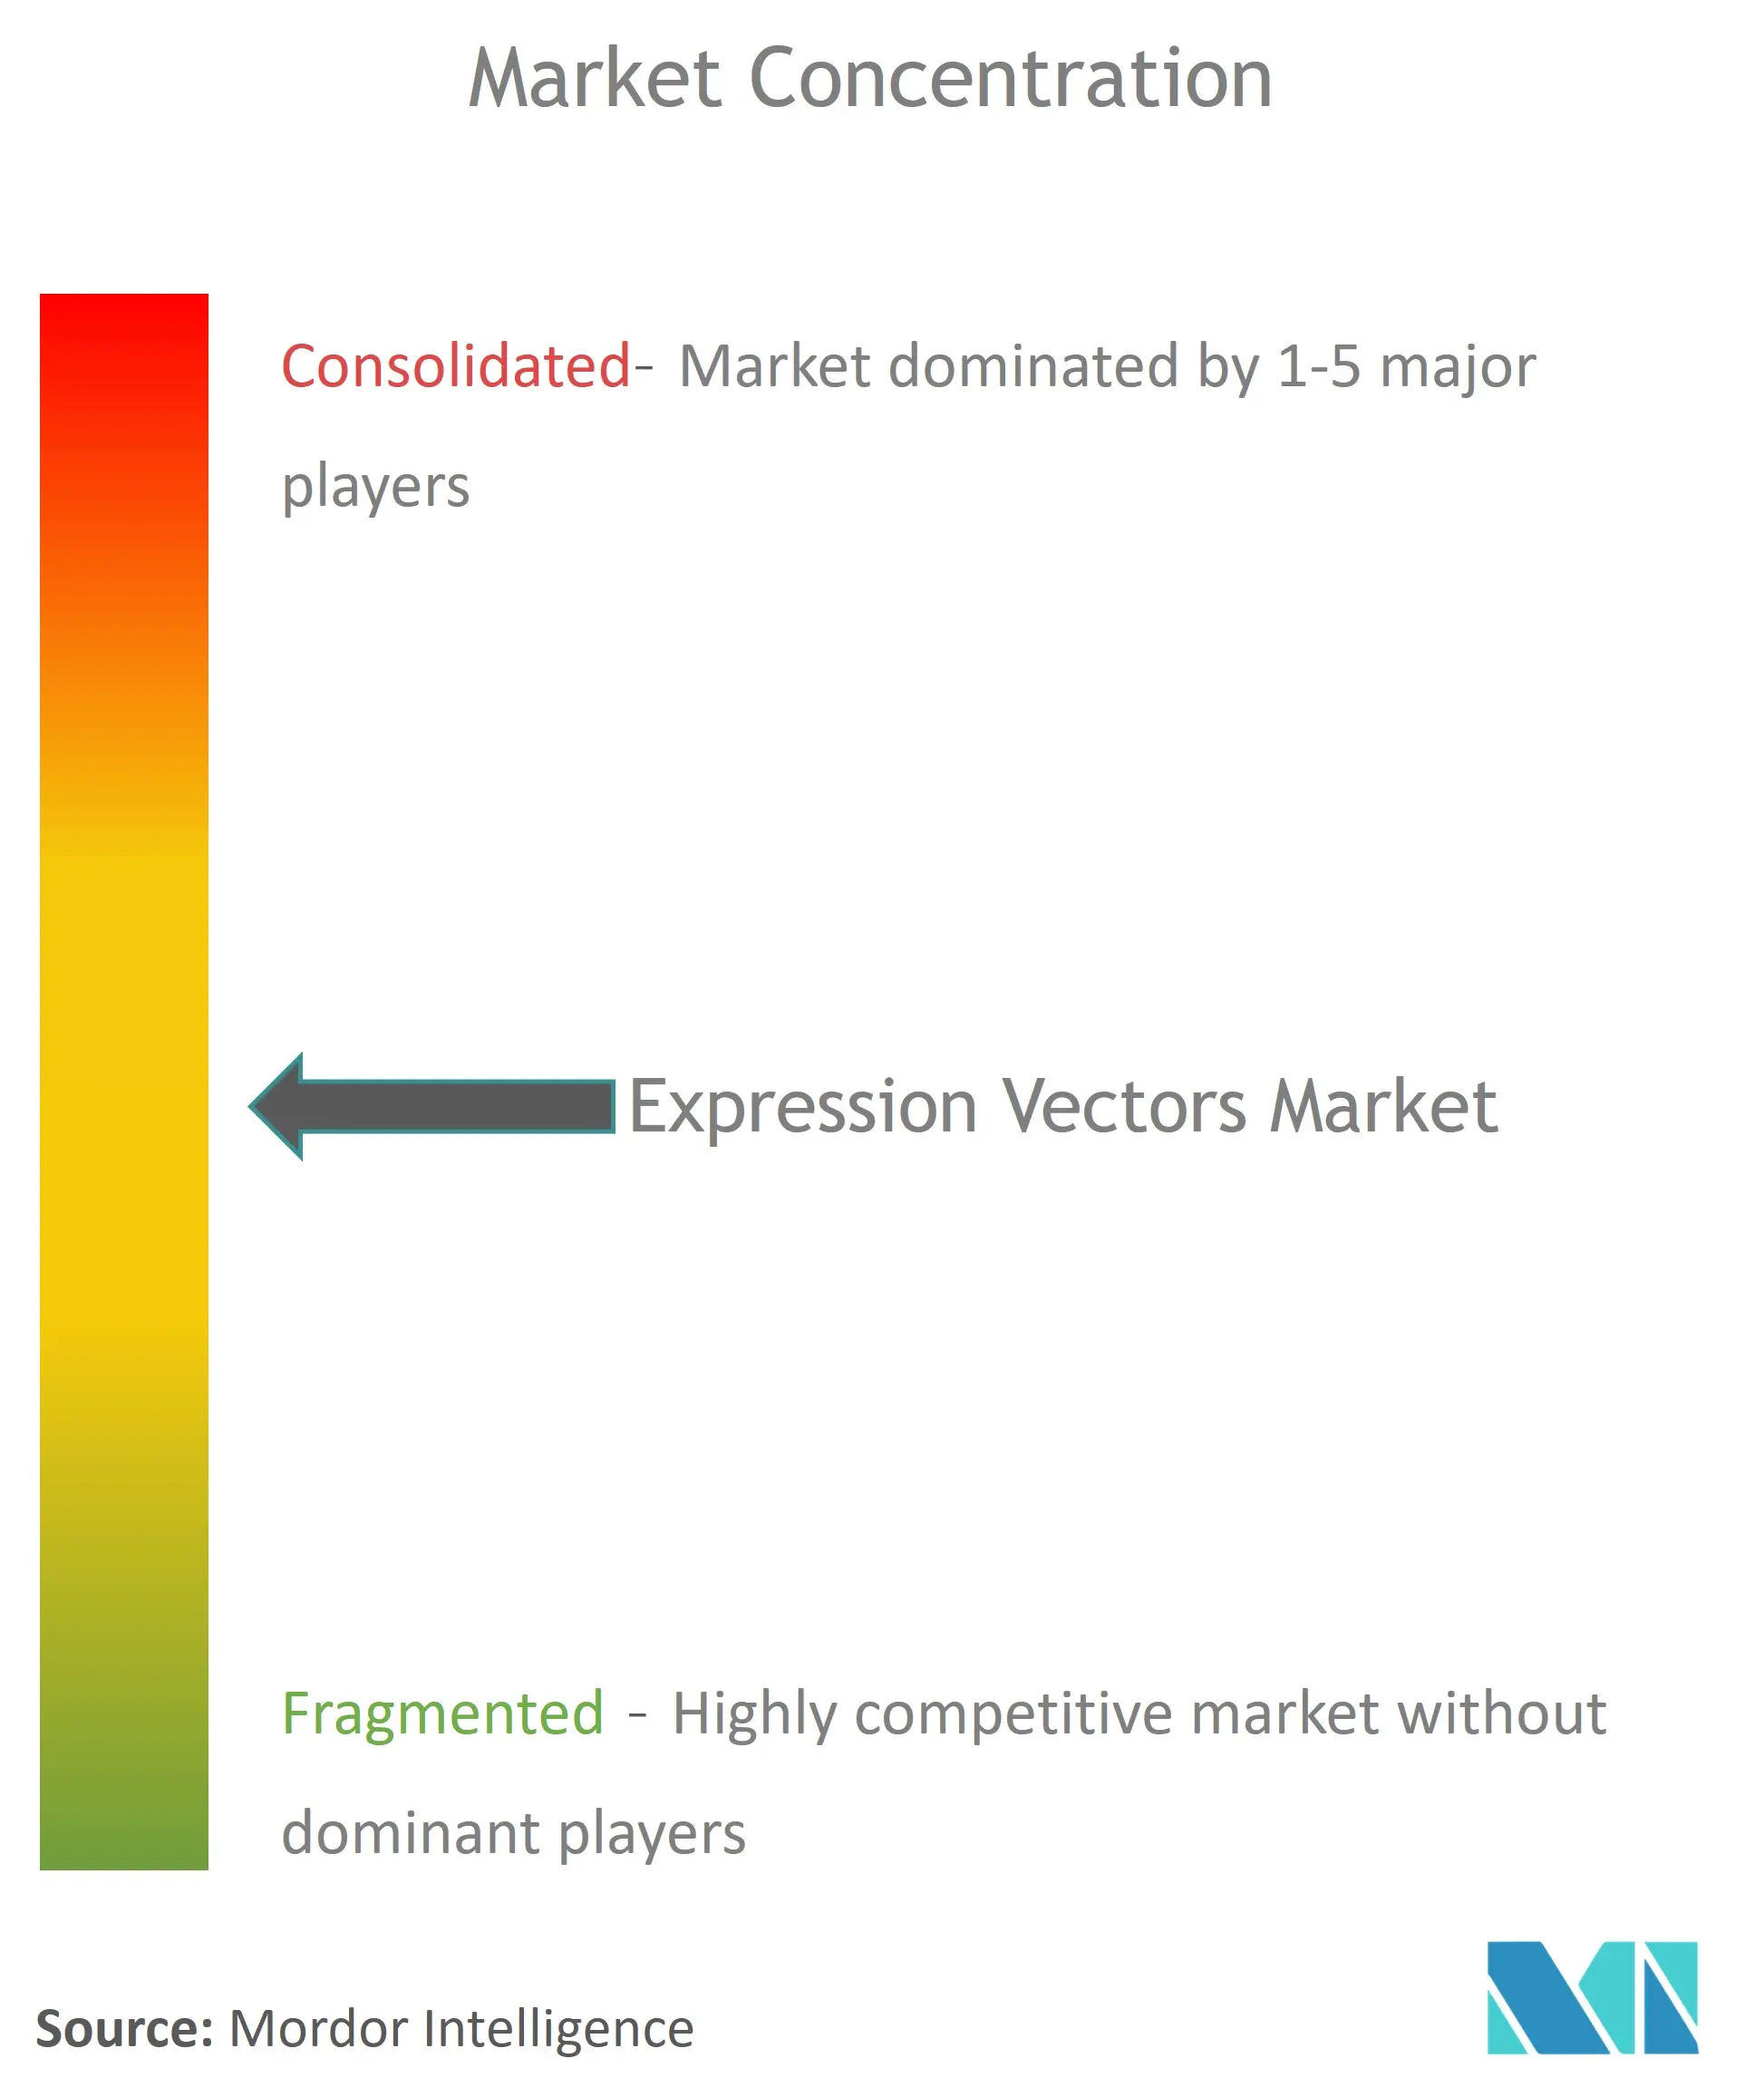 Expression Vectors Market Concentration